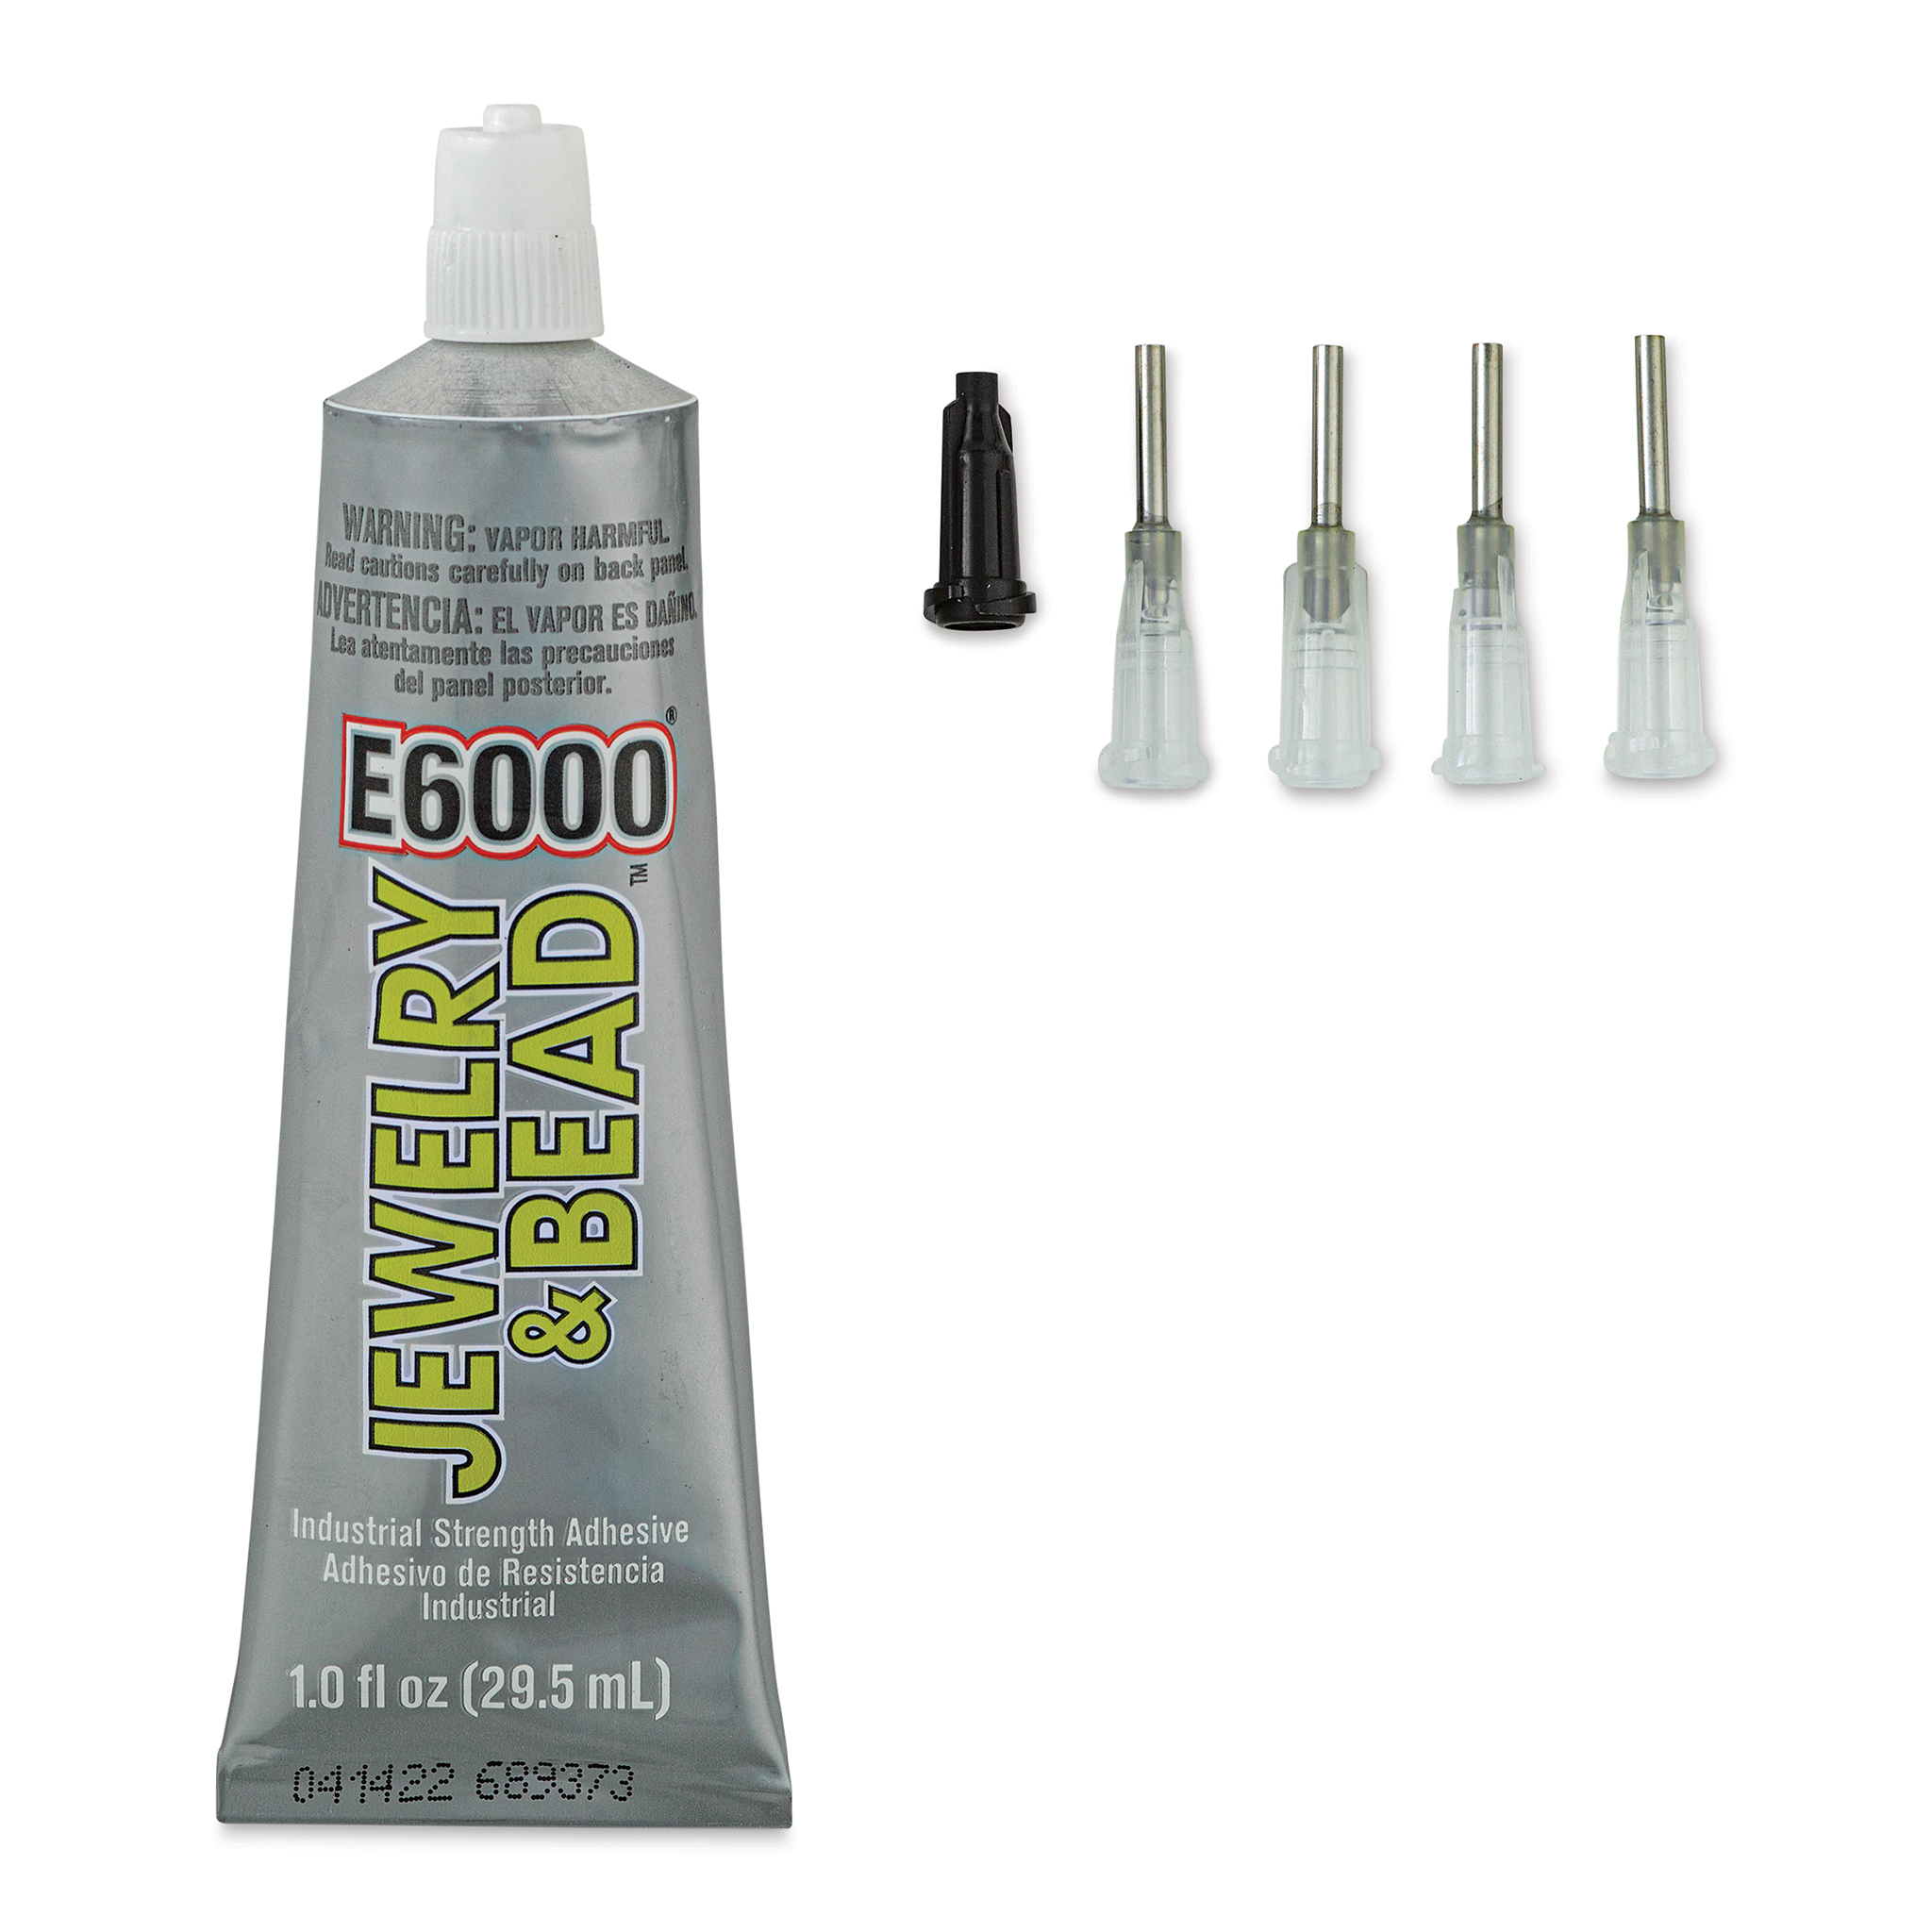 E6000 Jewelry & Bead Glue